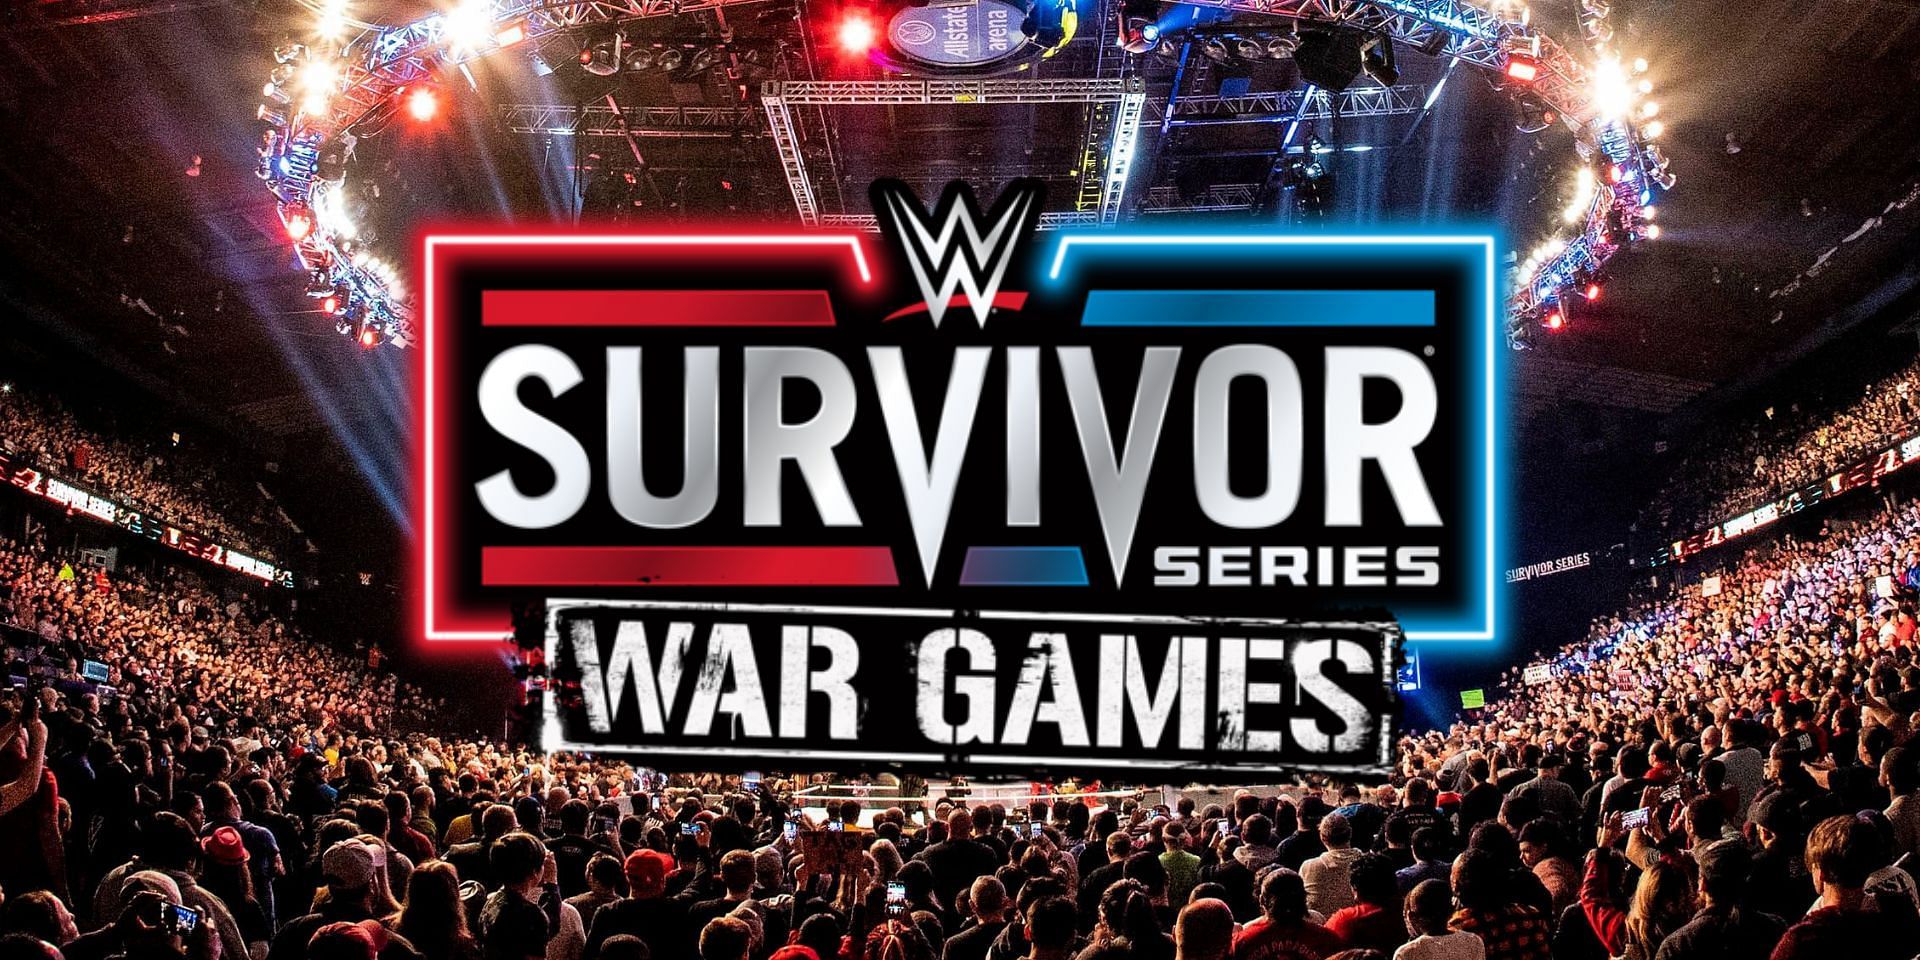 A Survivor Series: WarGames match has been changed